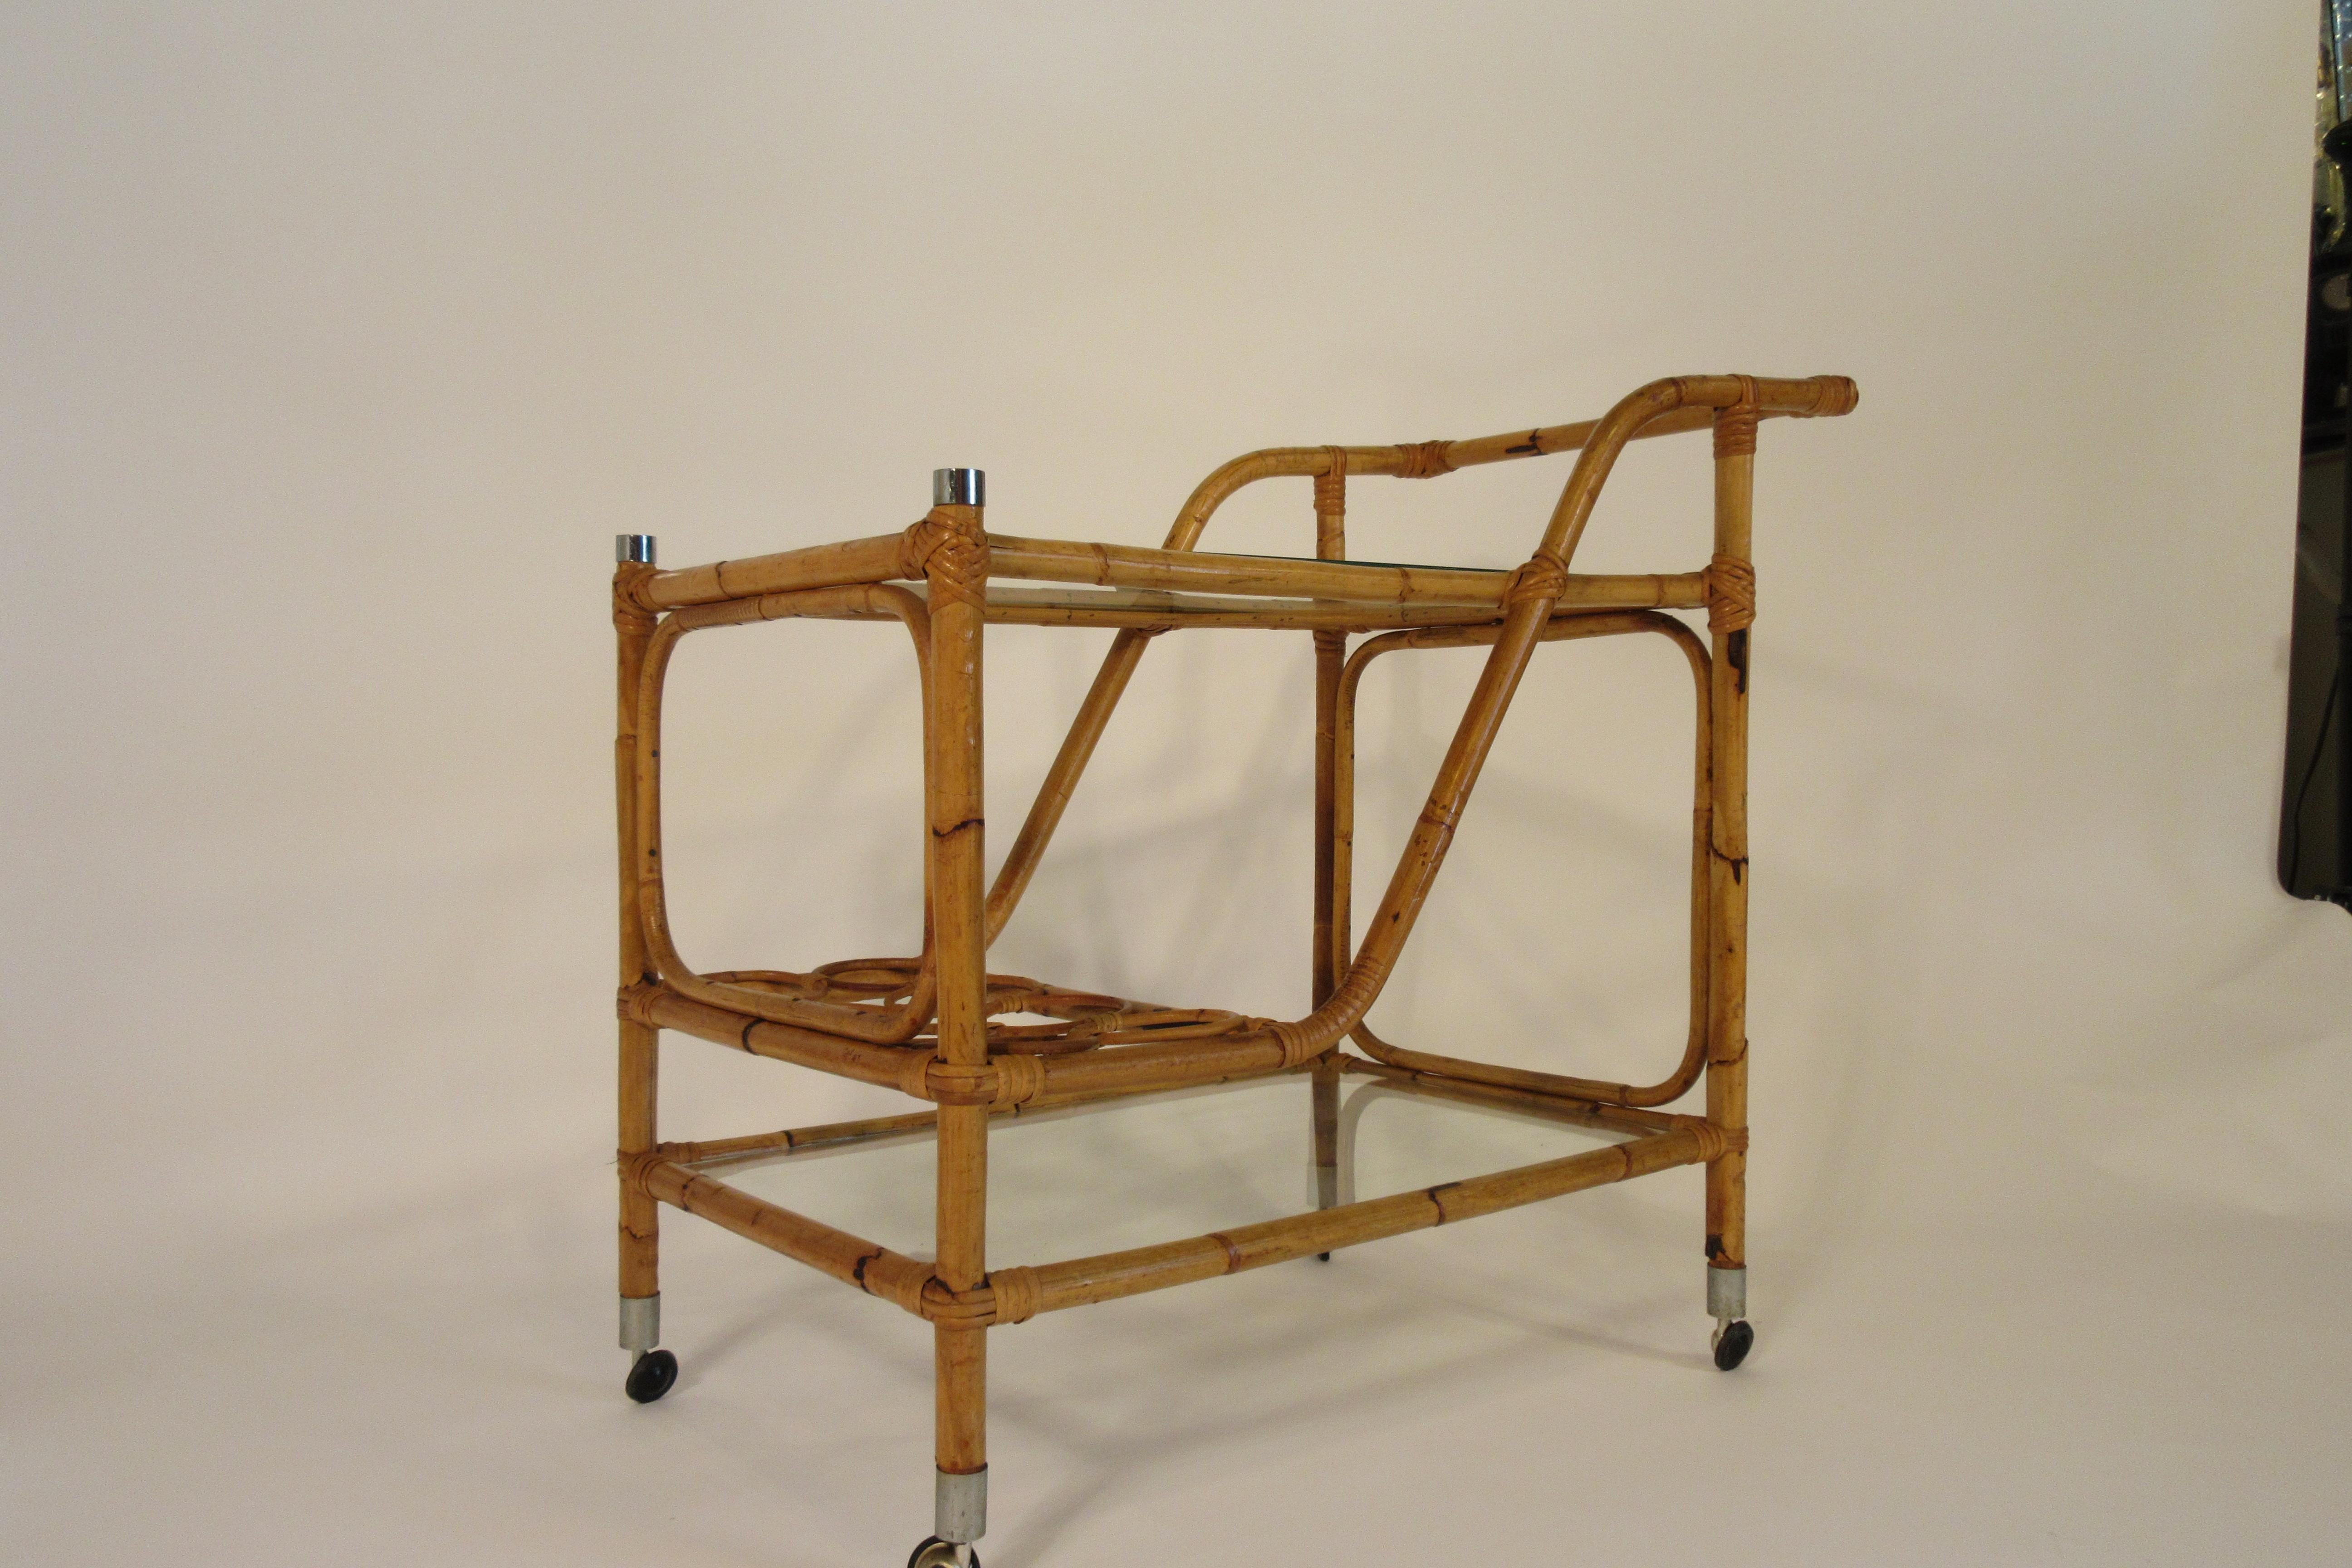 1960s bamboo bar cart. 2 shelves of glass.